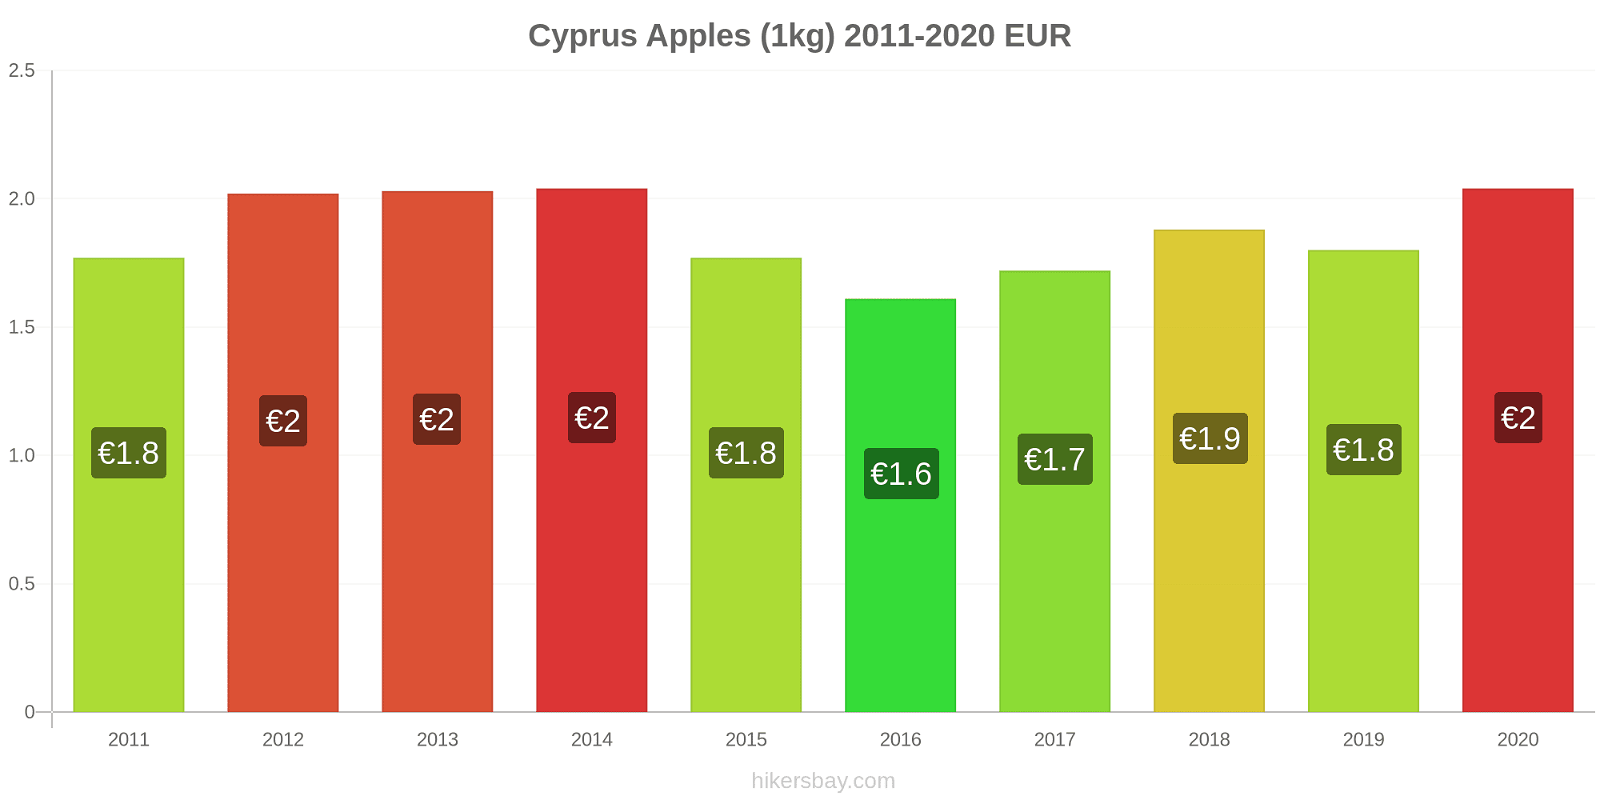 Cyprus price changes Apples (1kg) hikersbay.com